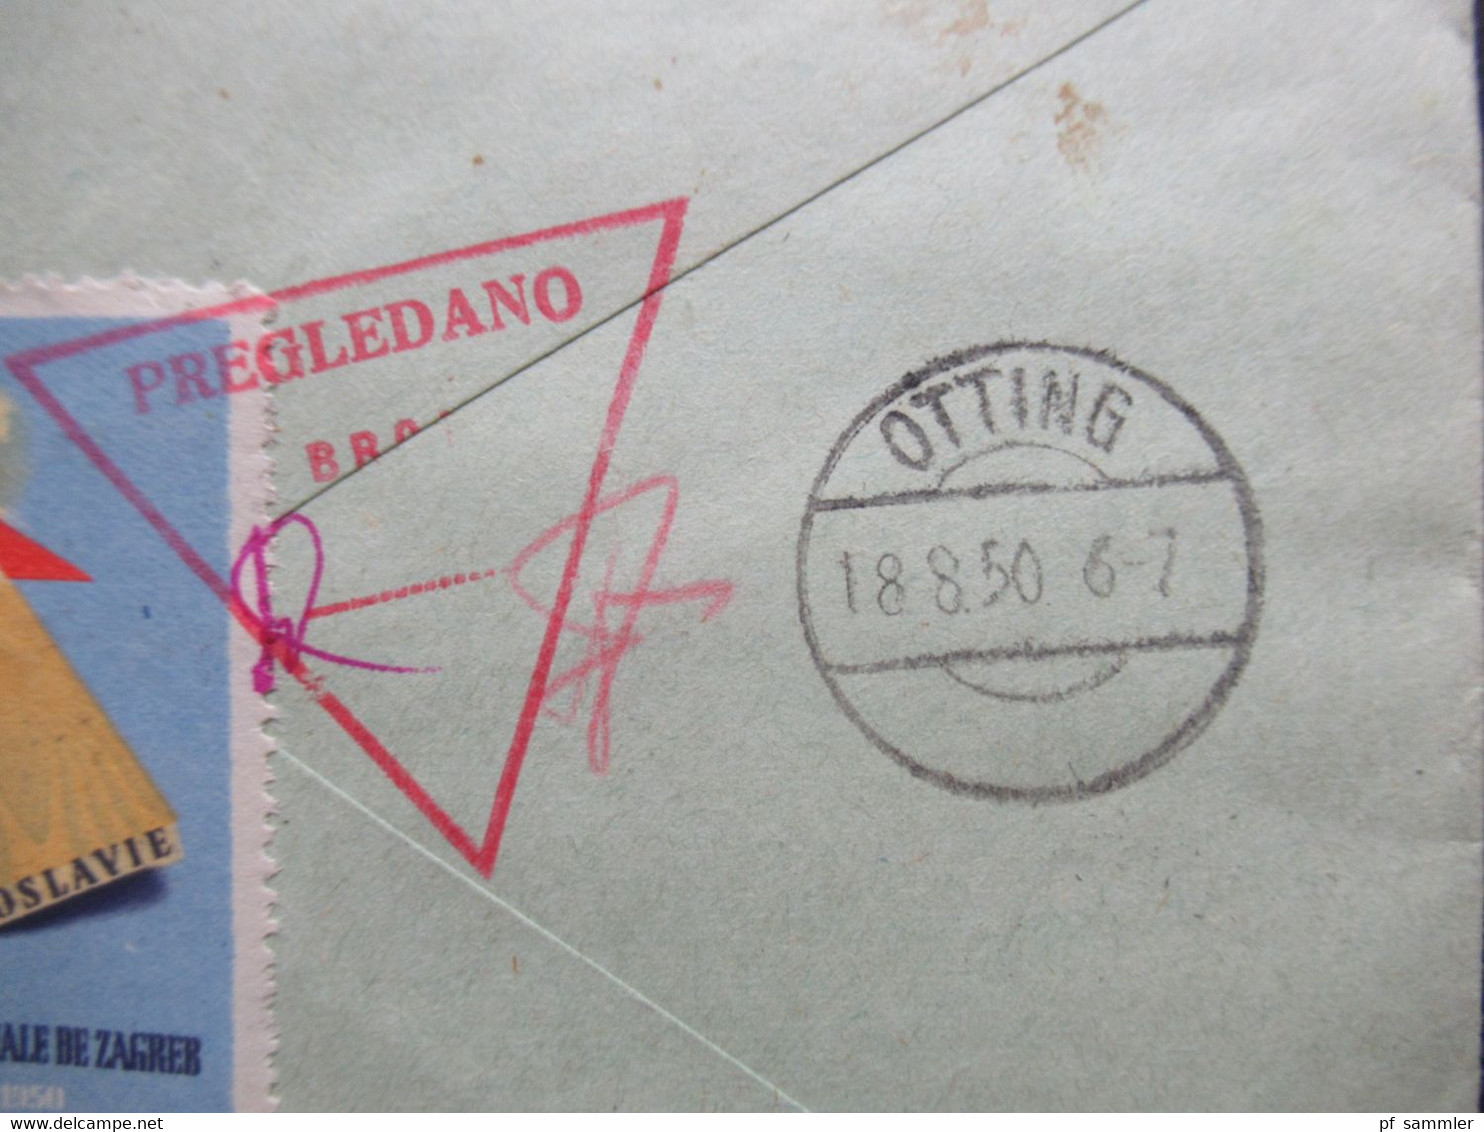 Jugoslawien 1950 Zensurbeleg roter Dreieckstp. Pregledano Einschreiben Beograd MiF 100 Jahre Eisenbahn Nr. 583/585